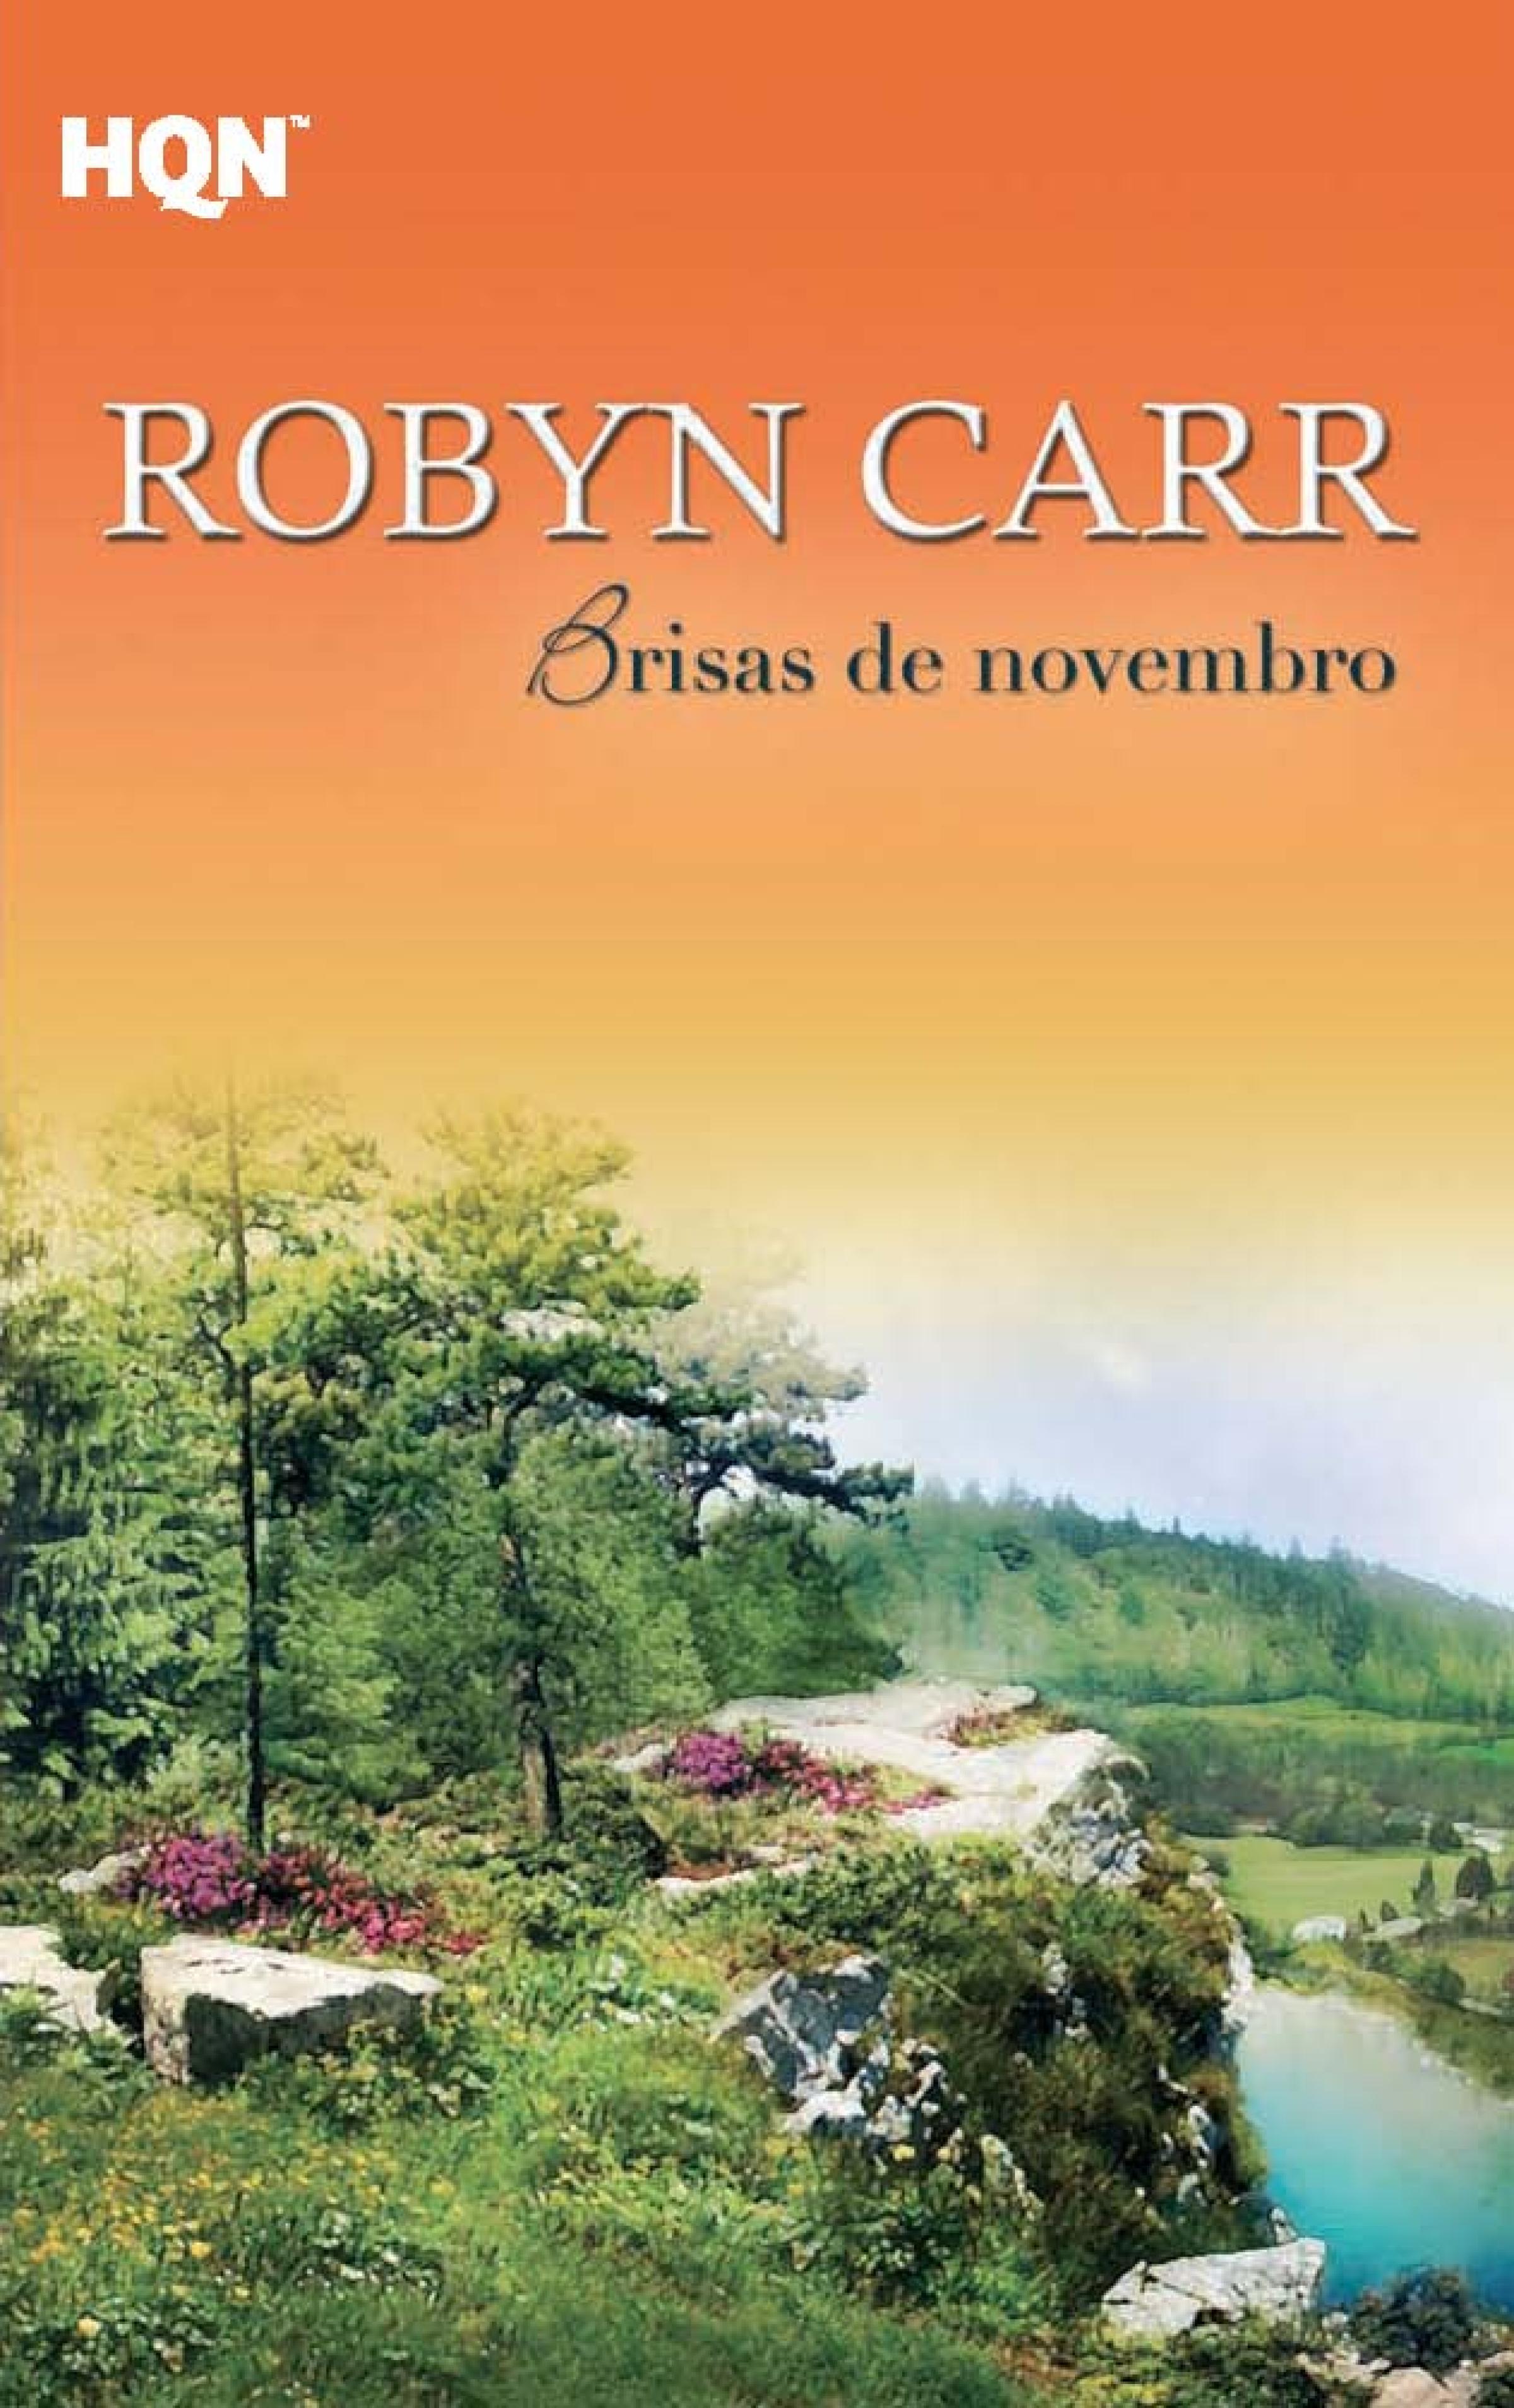 Скачать Brisas de novembro - Robyn Carr